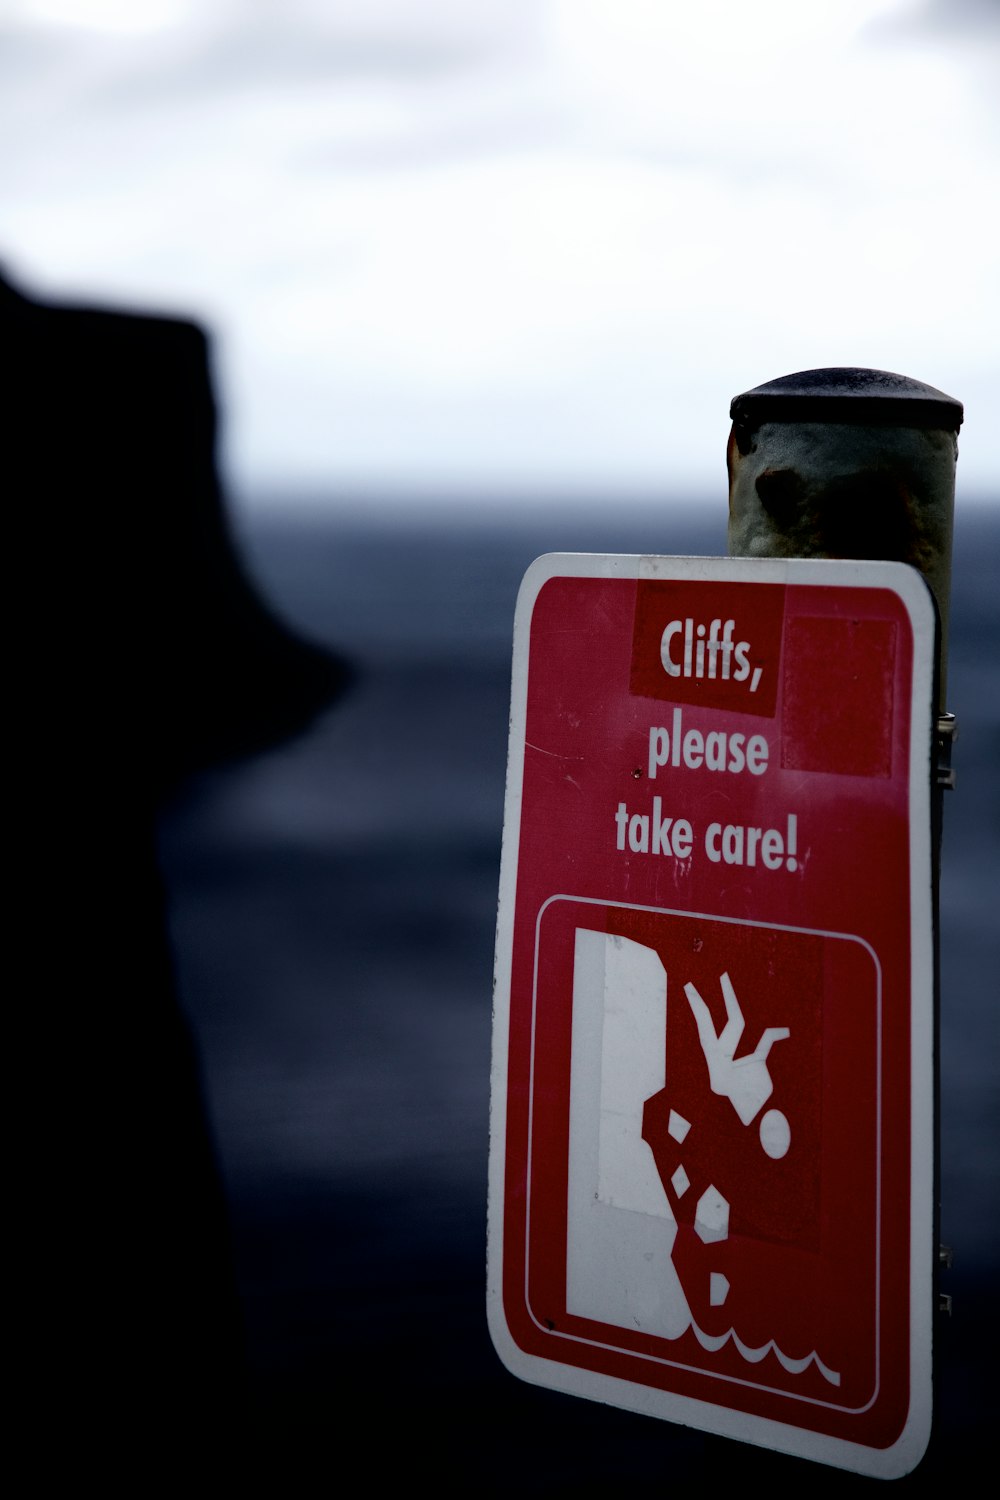 Cliffs Pleas Take Care signage